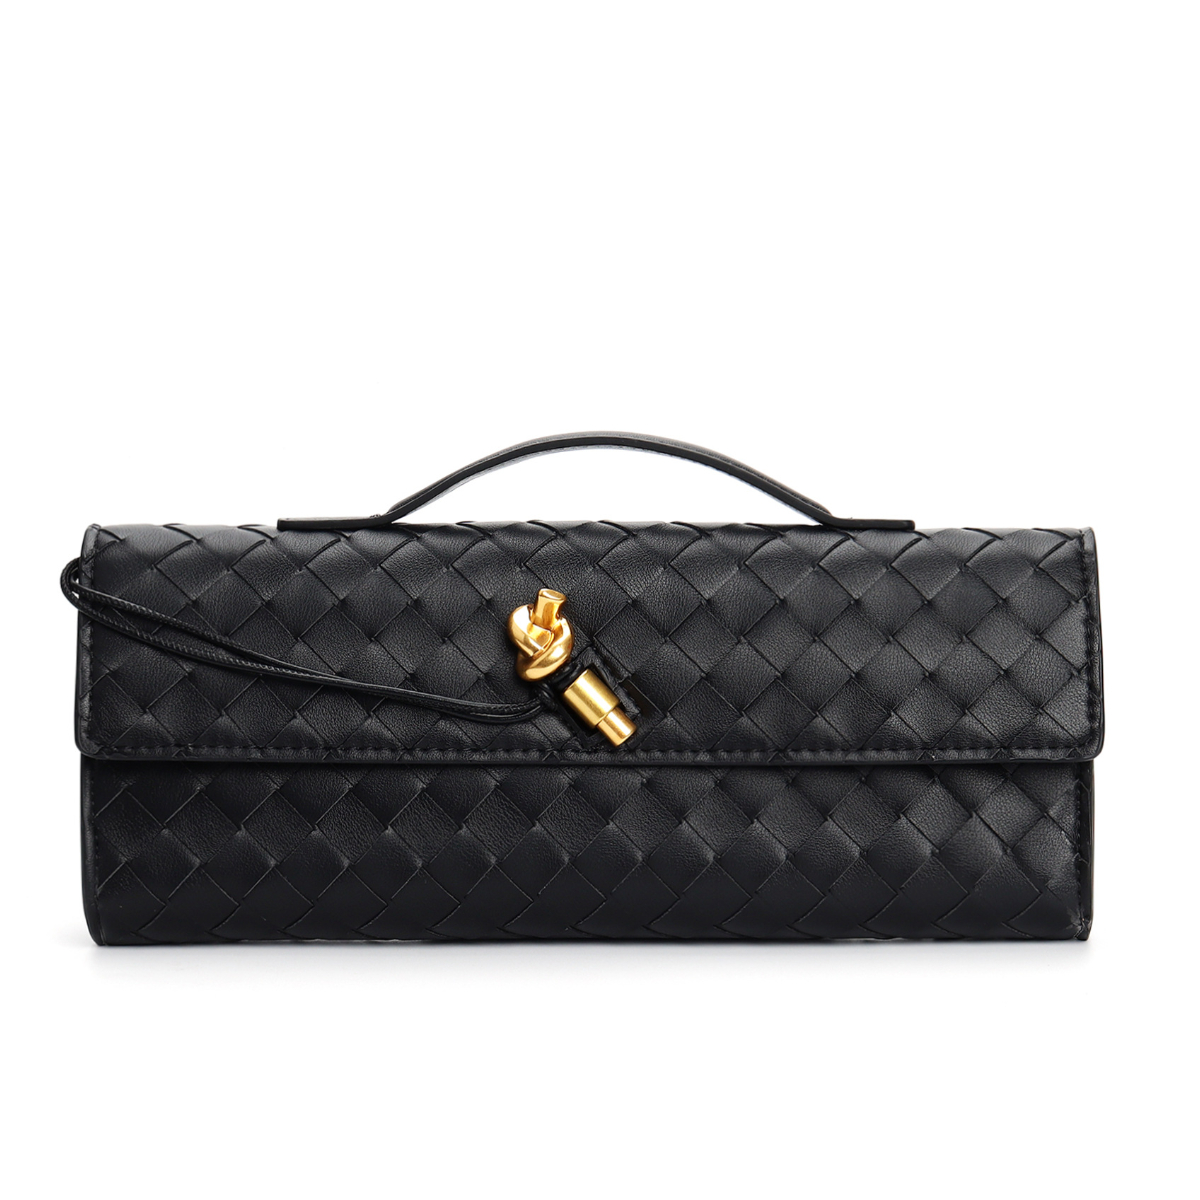 Women's Genuine Leather Clutch Shoulder Bag, Handmade Intrecciato Cowhide Evening Purse Handbag